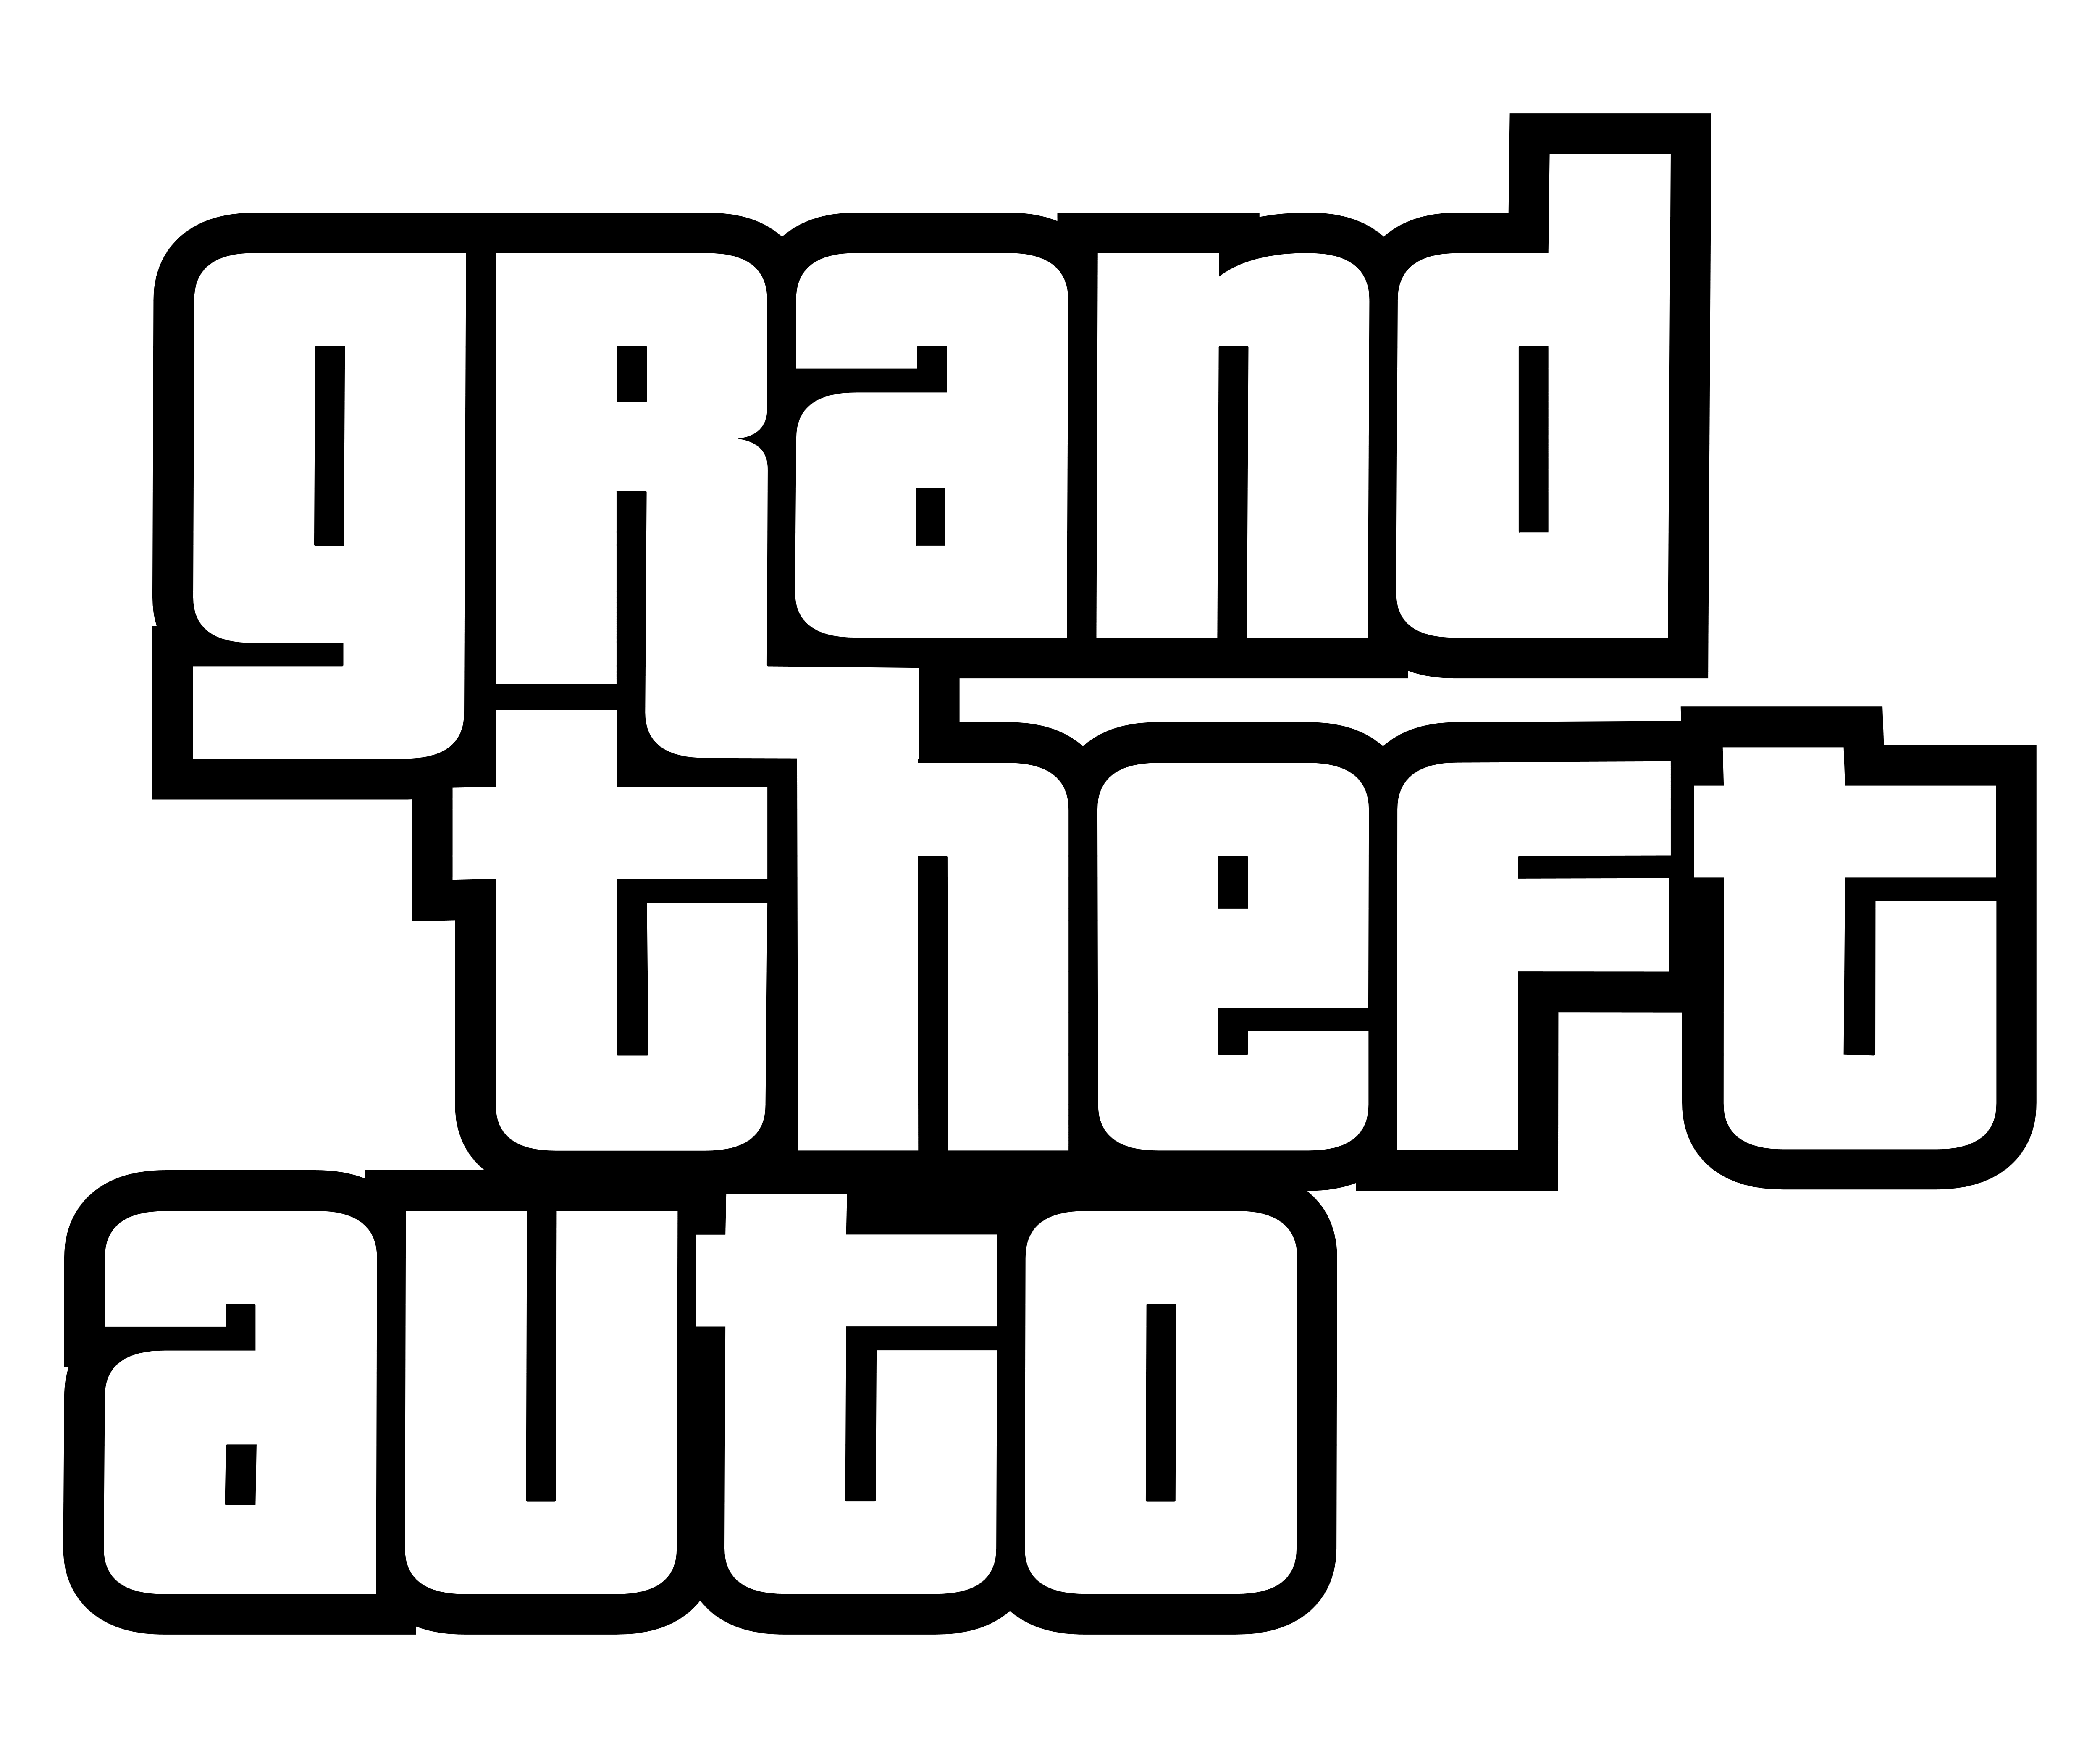 Gta Grand Theft Auto Logos Download